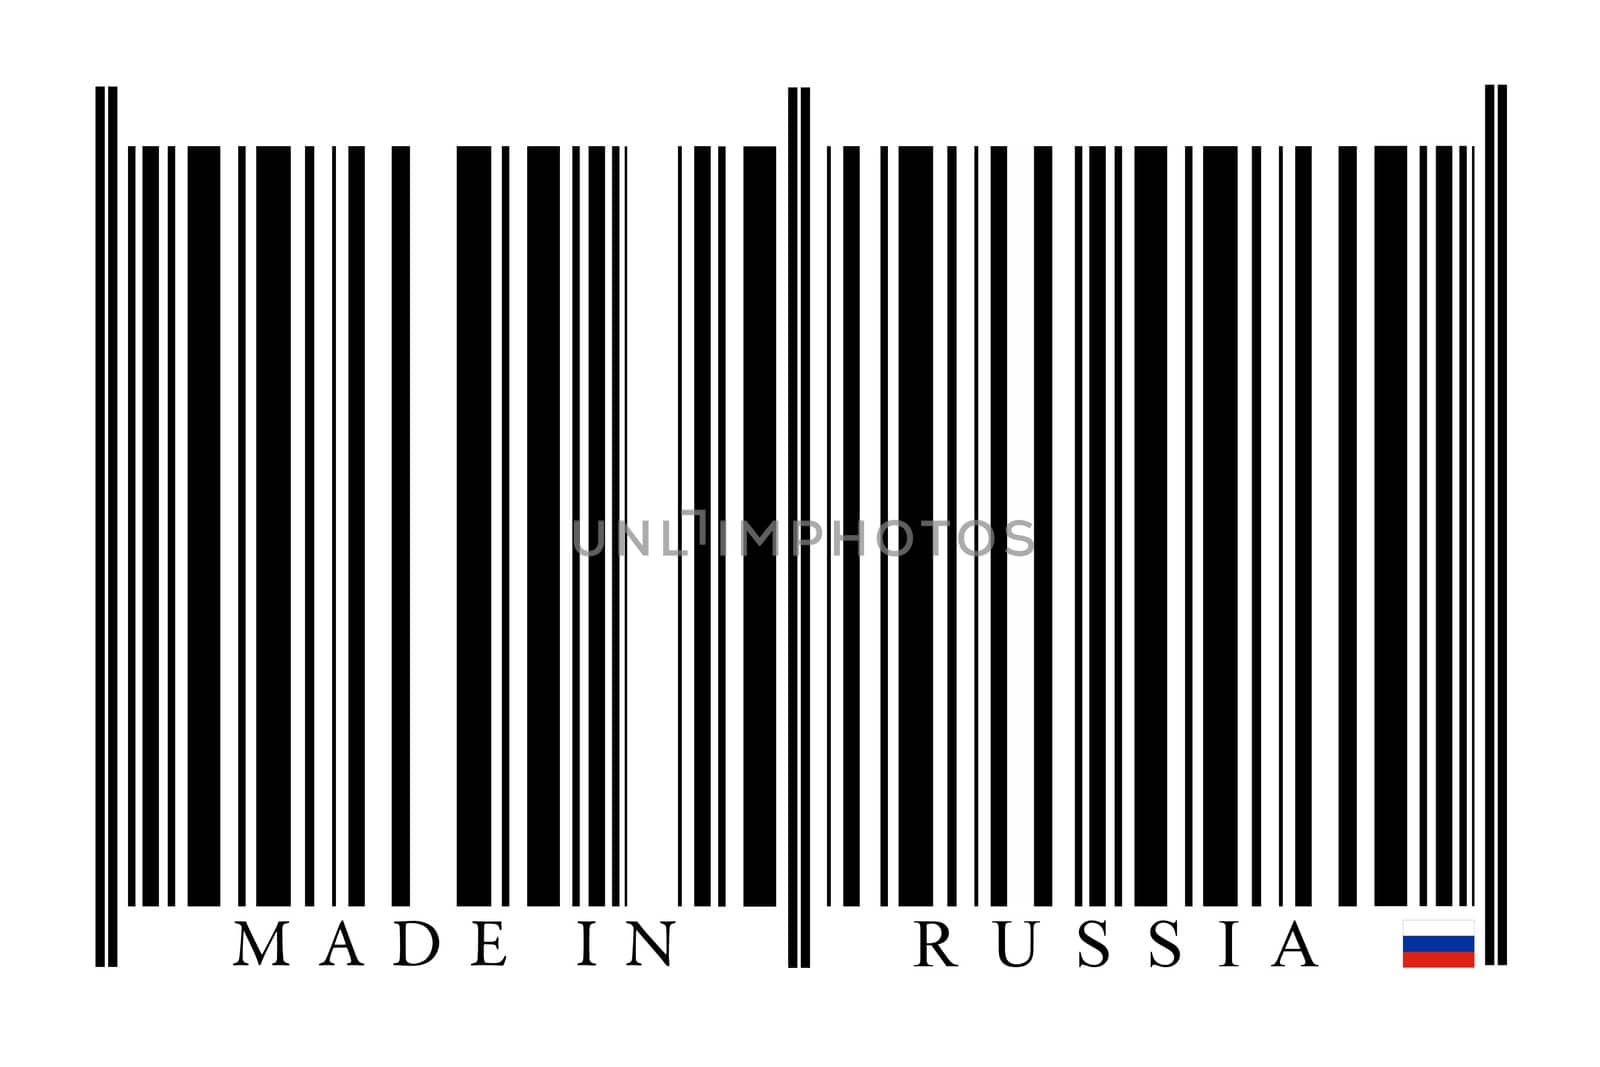 Russia Barcode by gemenacom